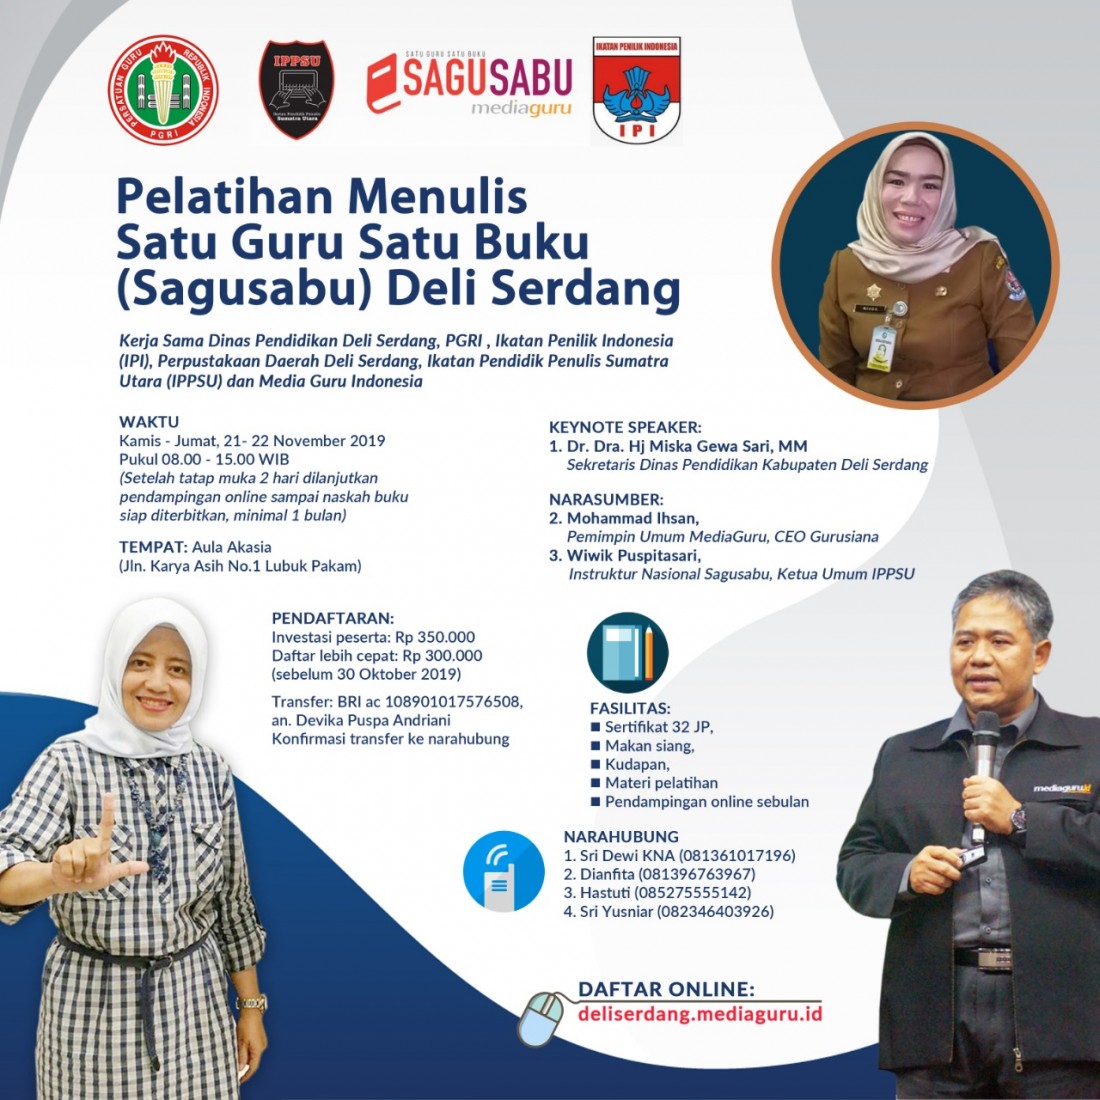 Pelatihan Menulis Sagusabu Deli Serdang (21 - 22 November 2019)